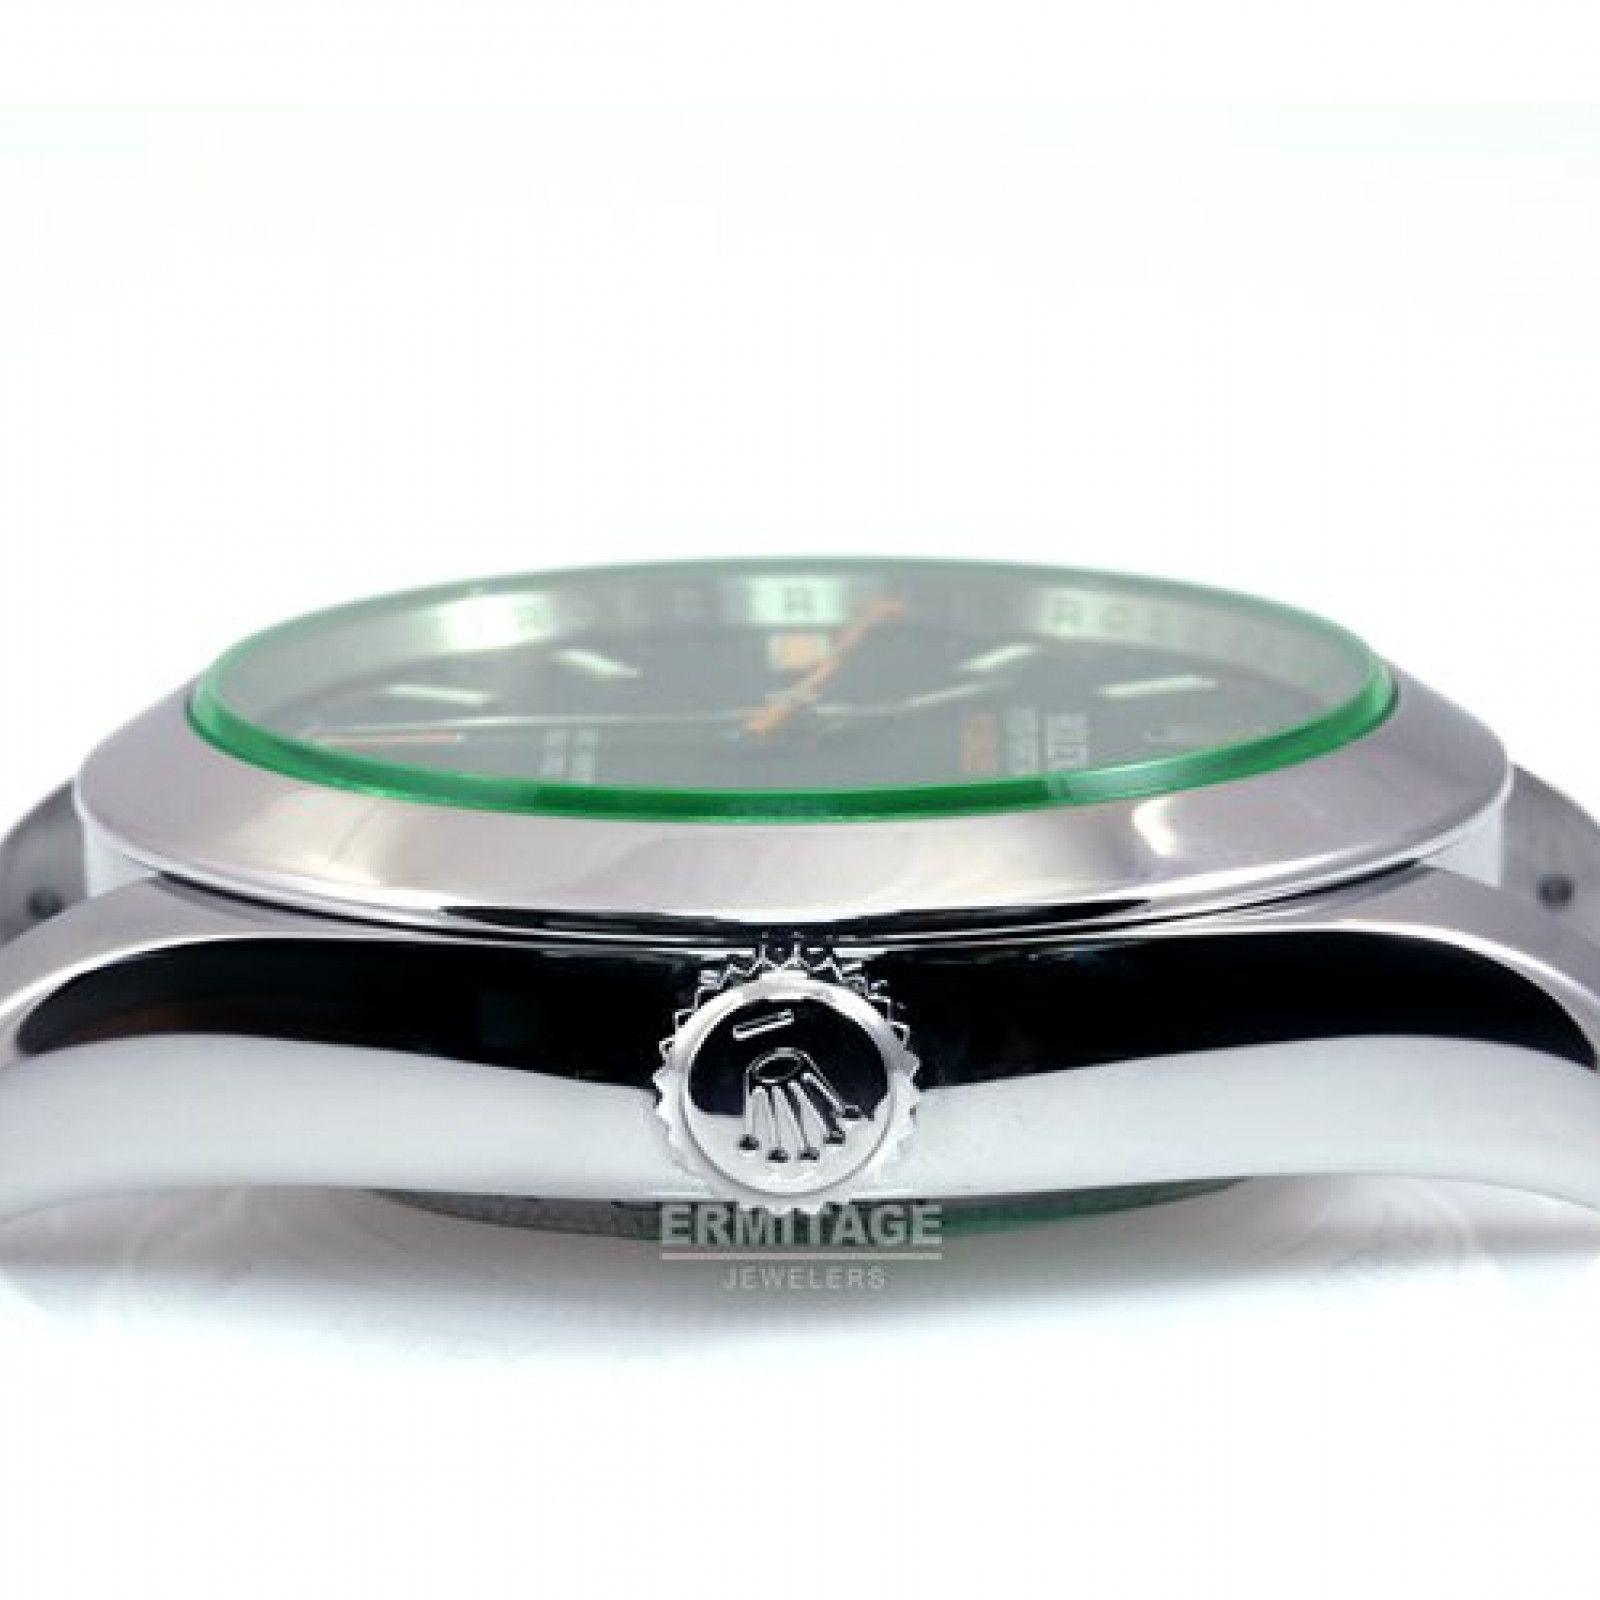 Rolex Milgauss 116400GV Green Crystal